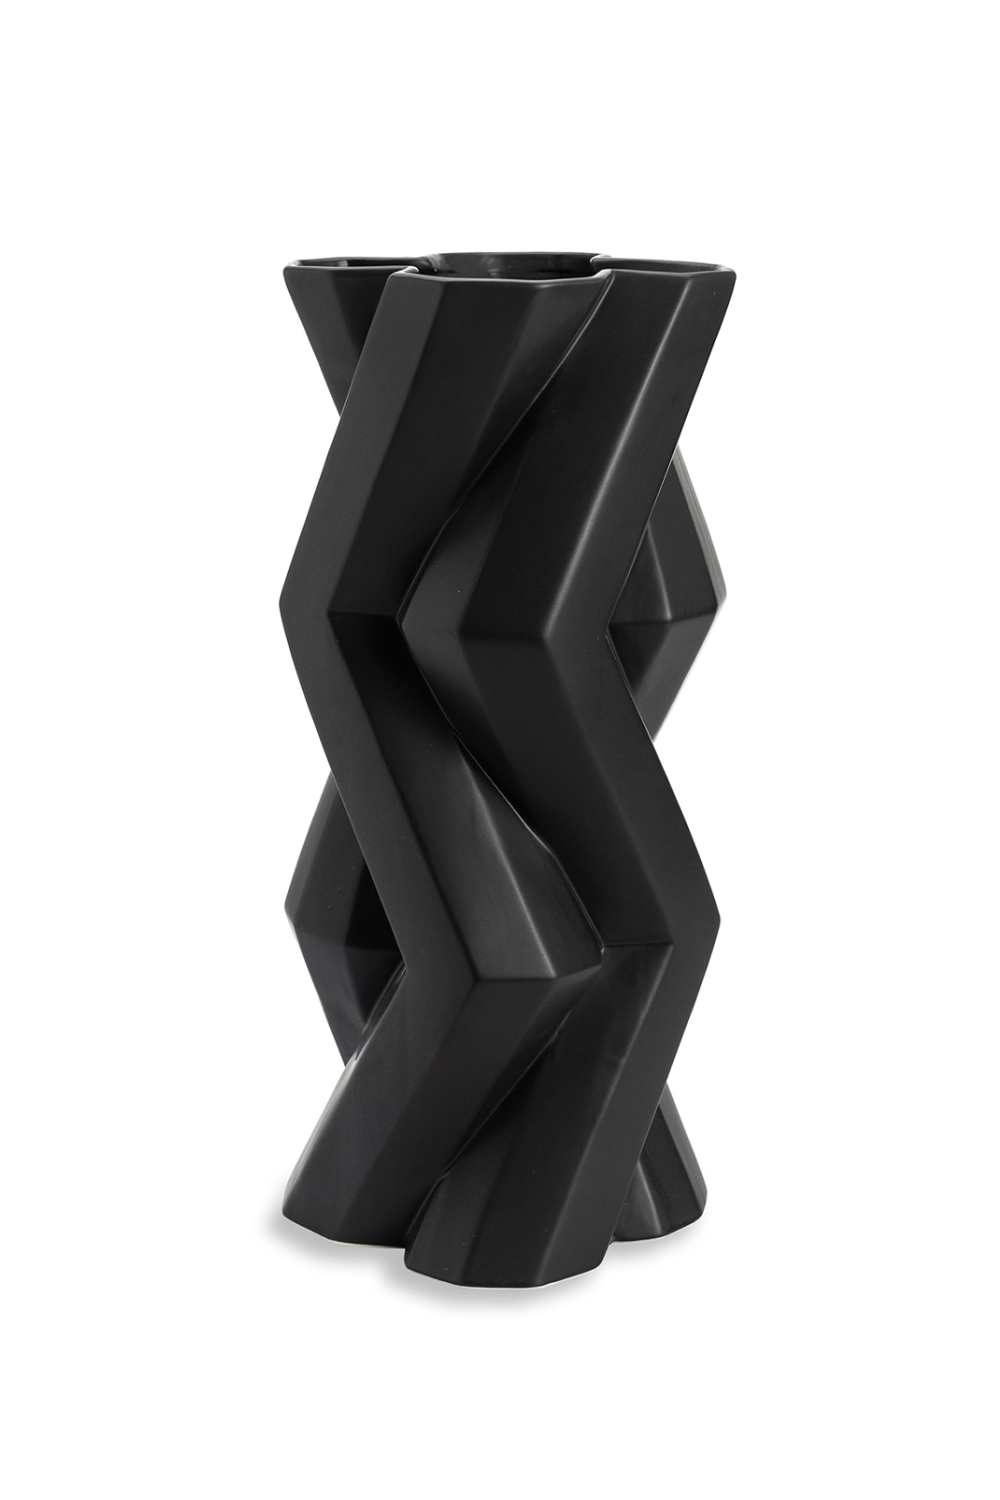 Geometrical Black Ceramic Vase | Liang & Eimil Boccio | OROA.com